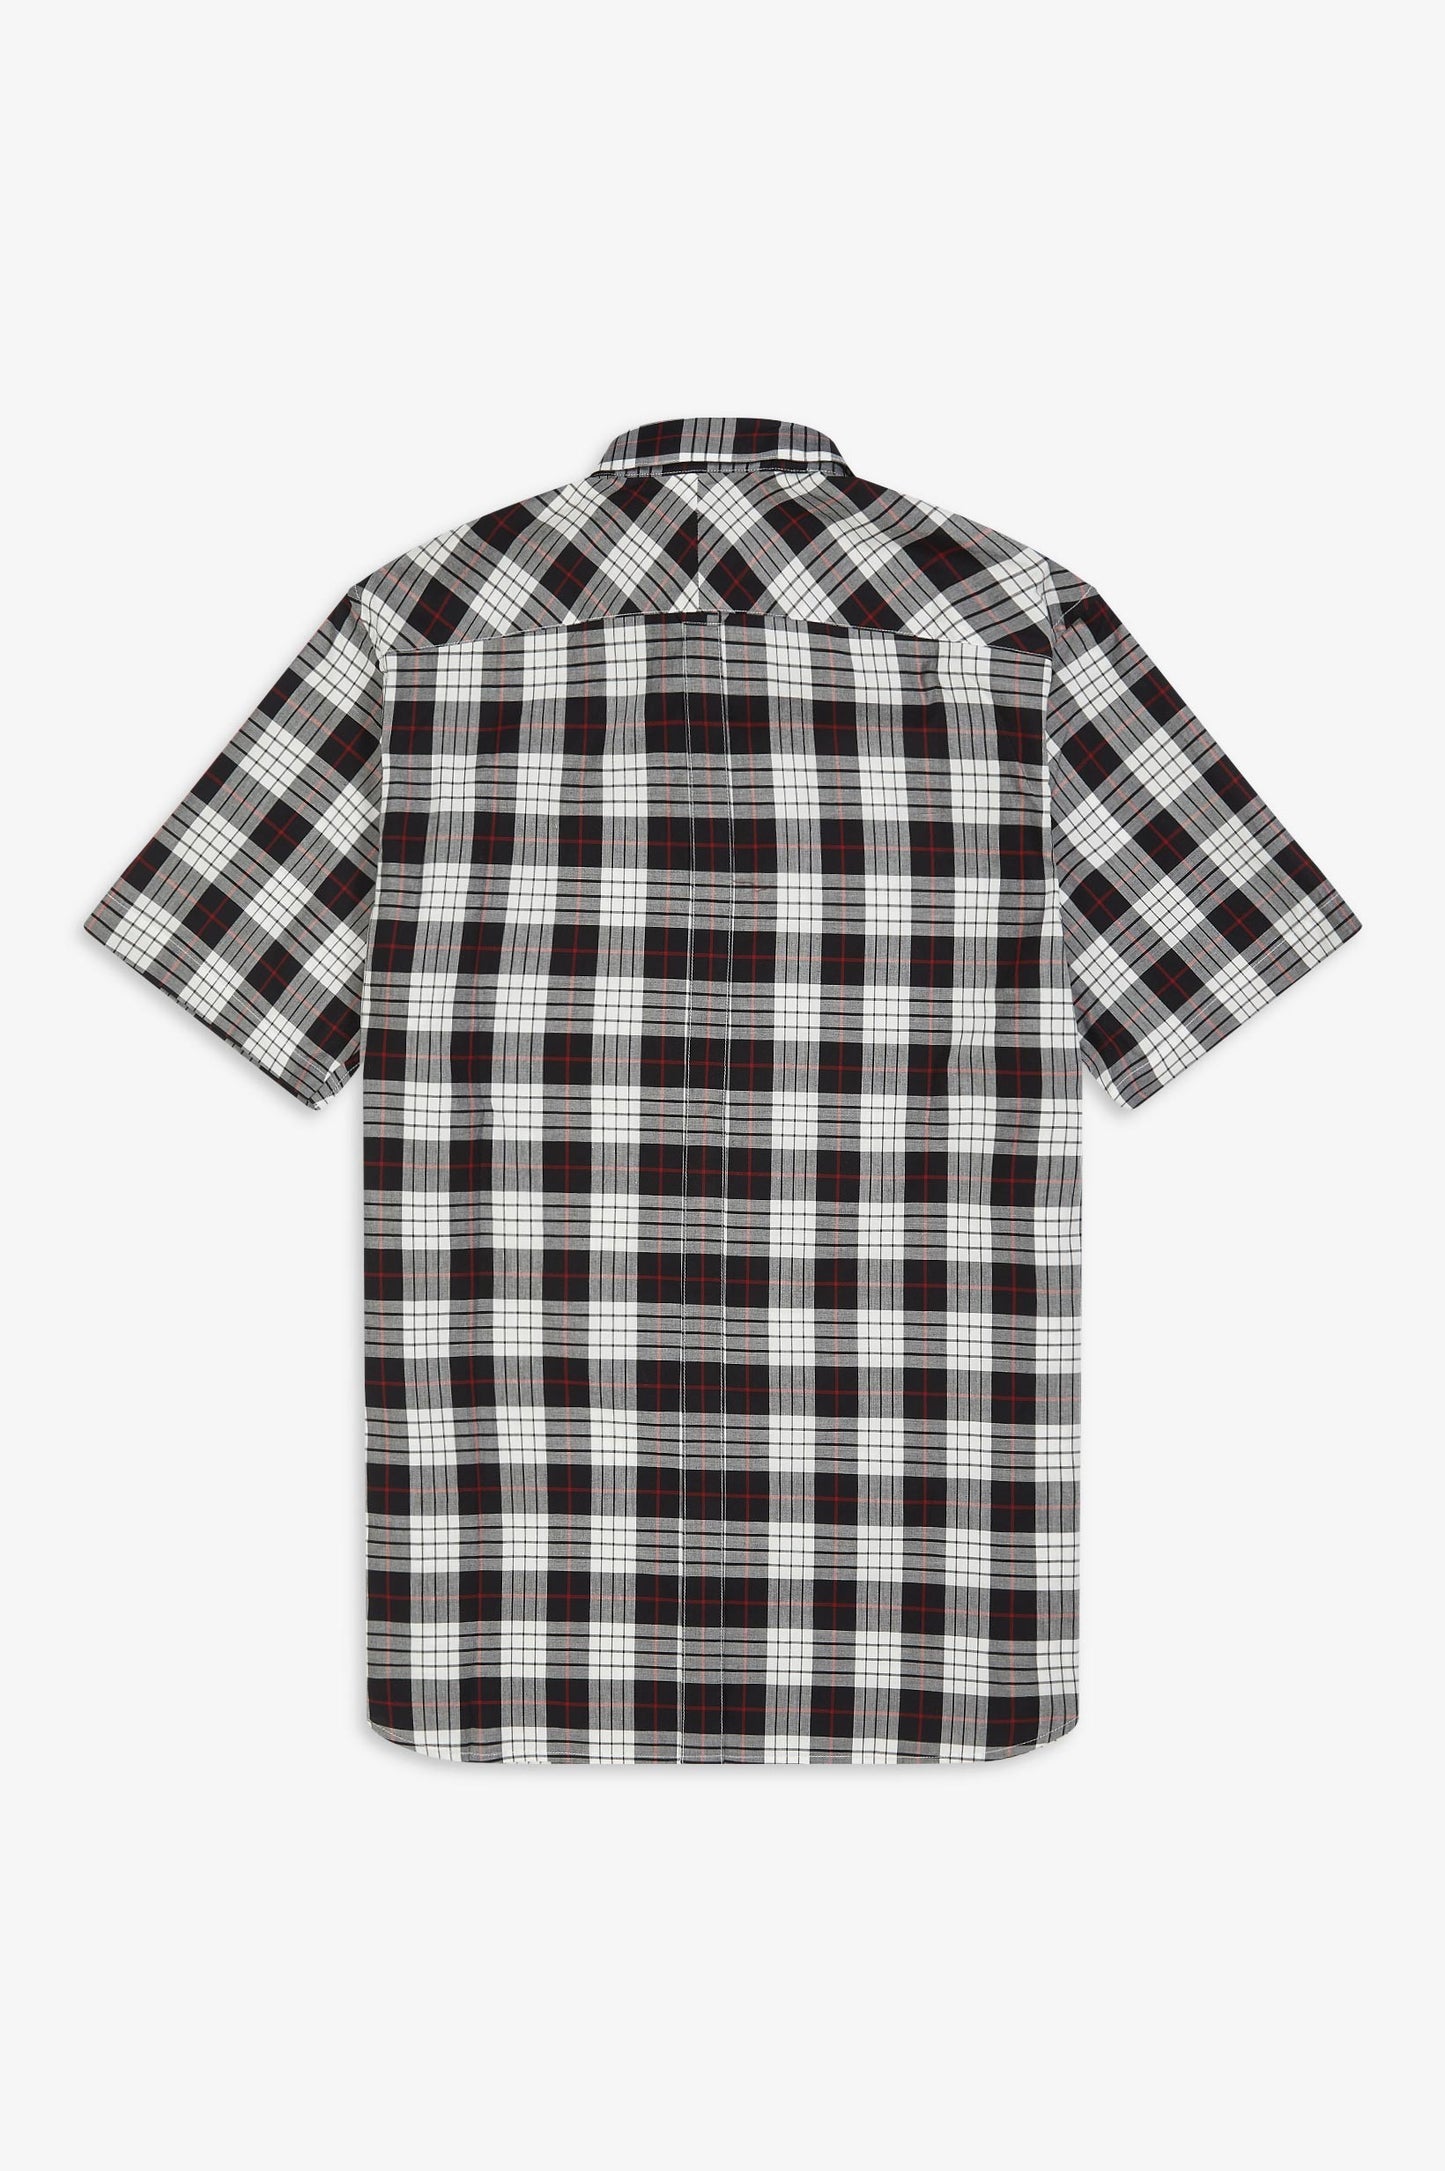 Tartan Shirt (black & white)